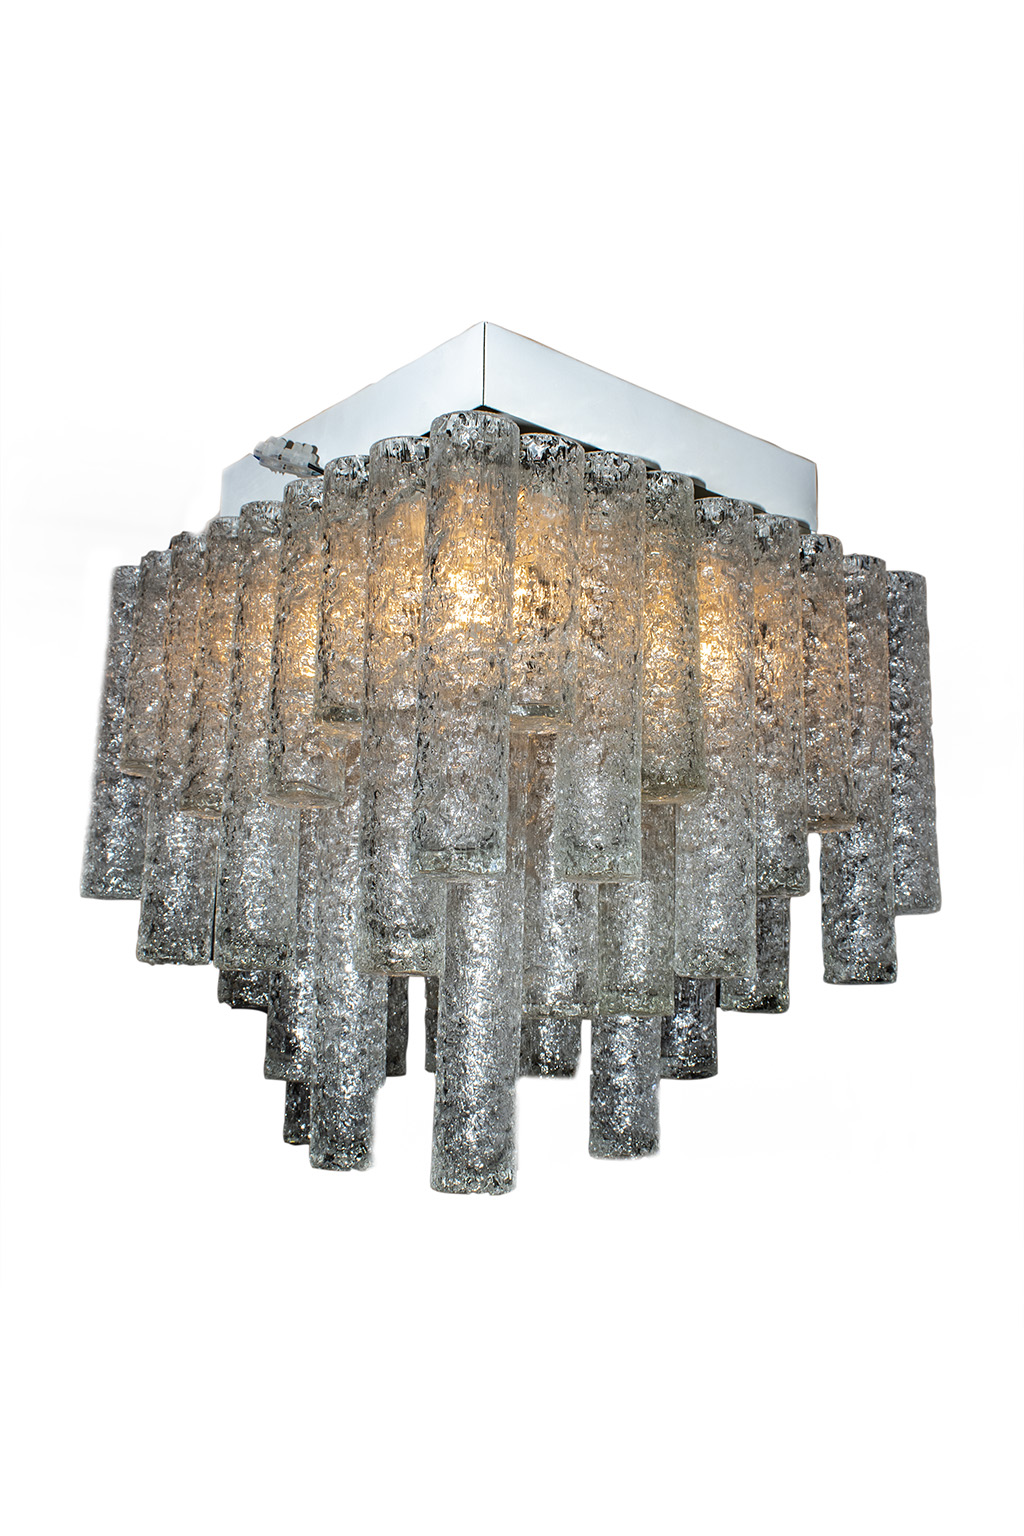 Ice glass chandelier from Doria